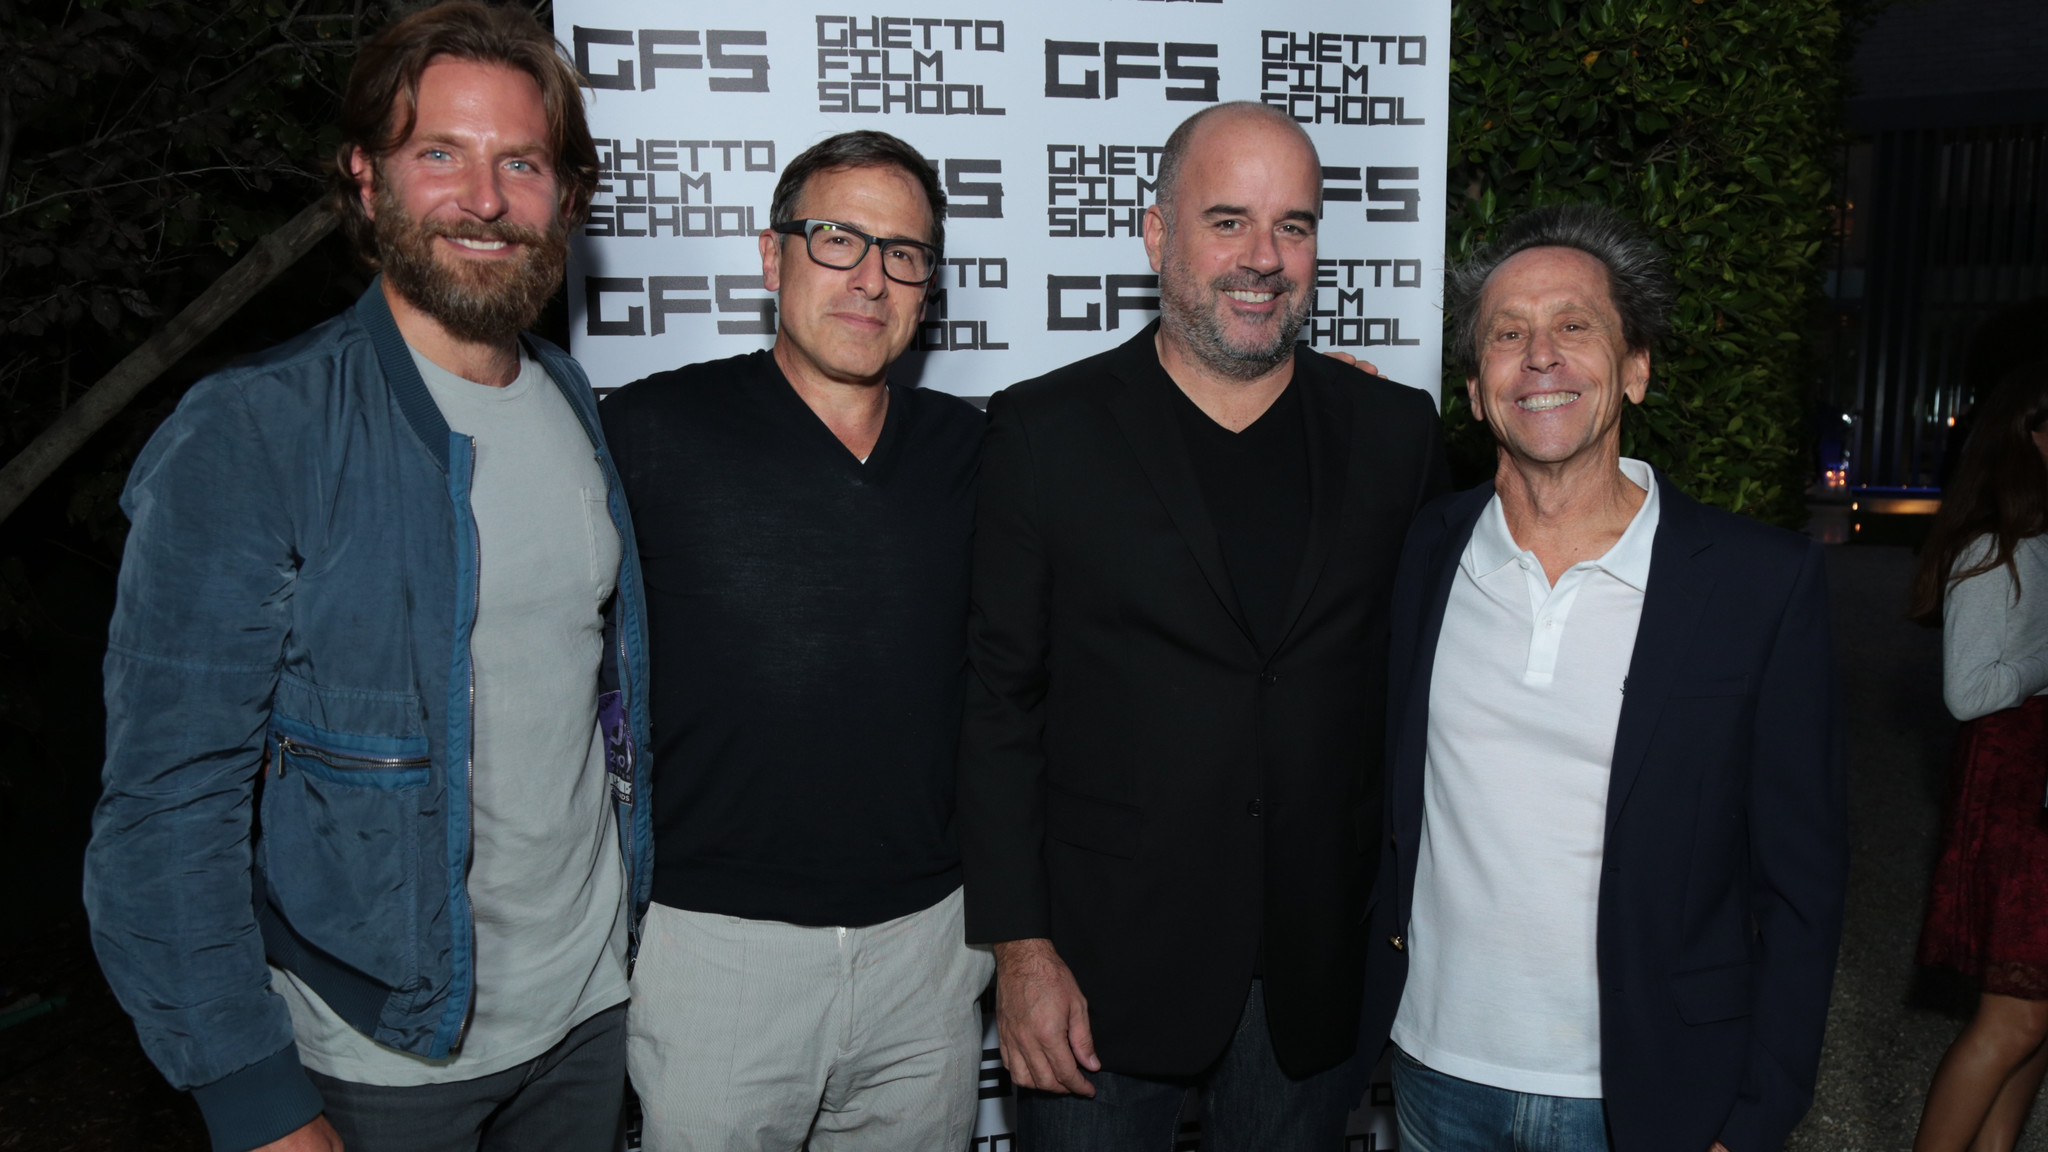 Bradley Cooper, David O. Russell, JJ Abrams join Brian Grazer to raise money for nonprofit Ghetto Film School - Los Angeles Times